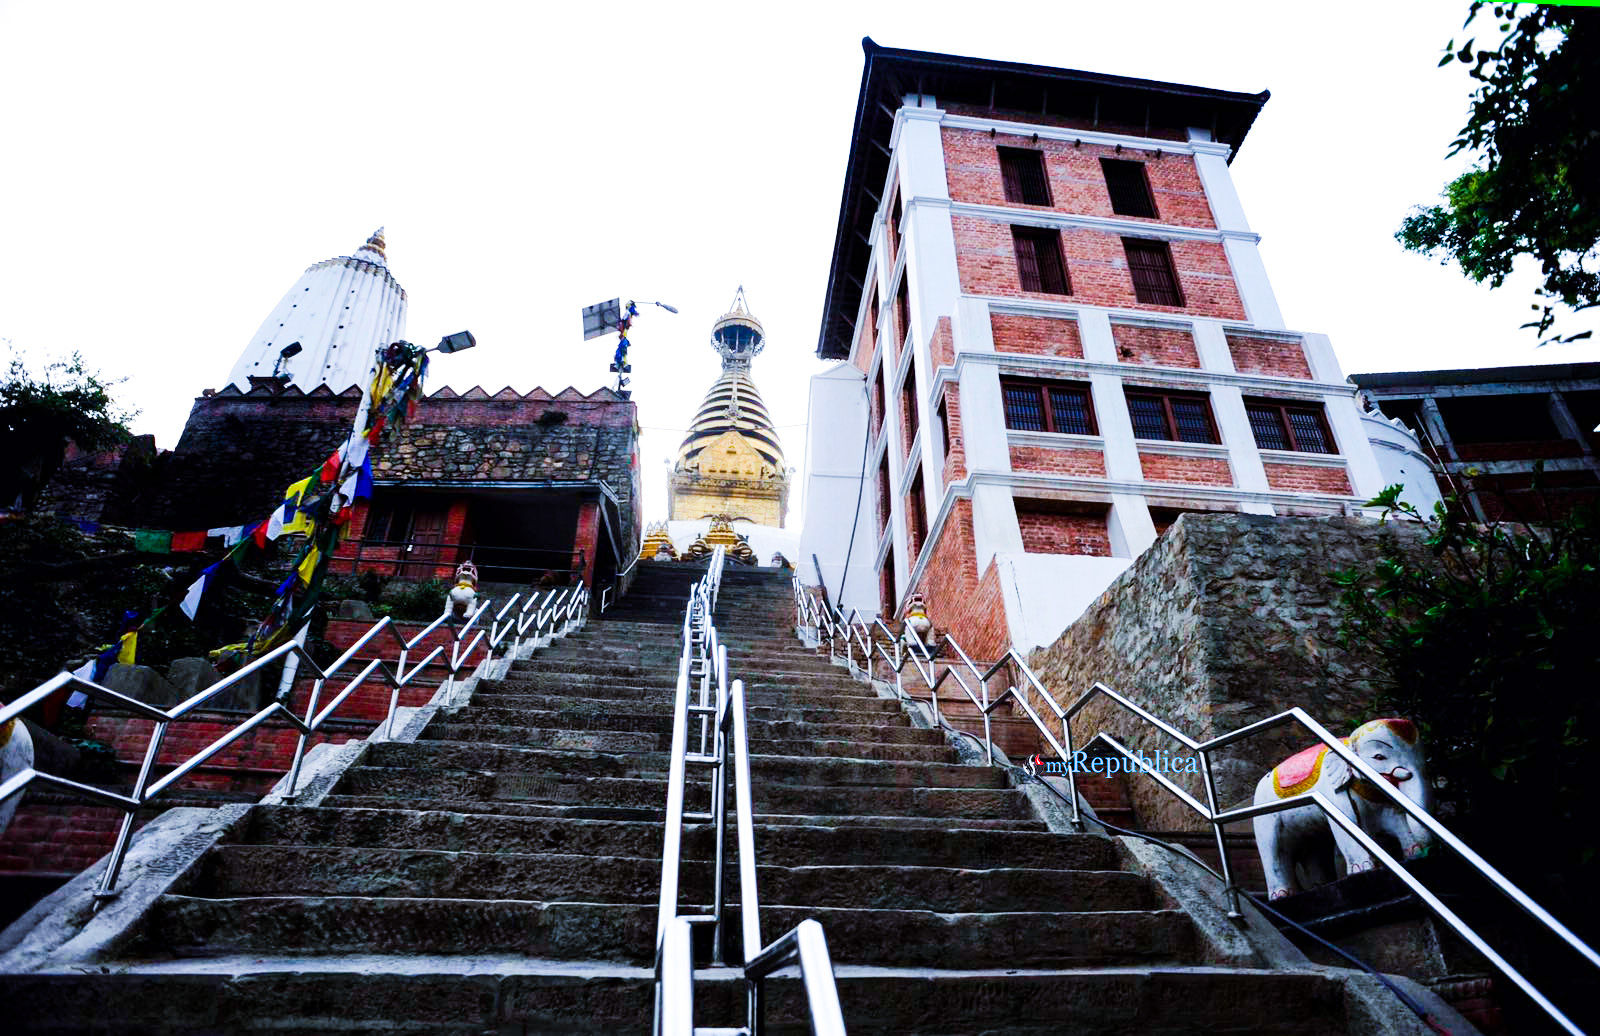 IN PICS: Swayambhunath premises during lockdown